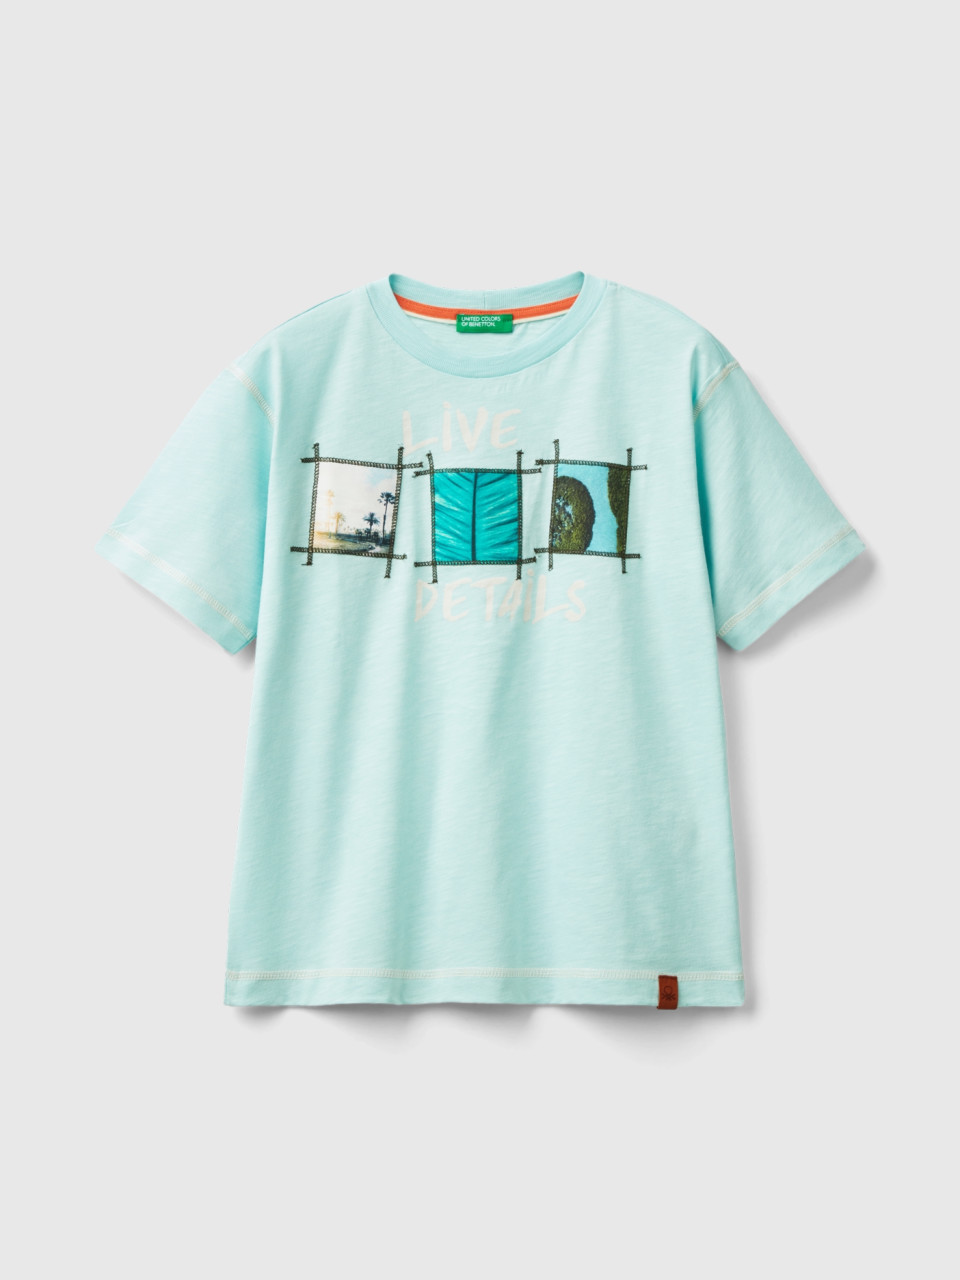 Benetton, Camiseta Con Estampado Fotográfico, Verde Agua, Niños